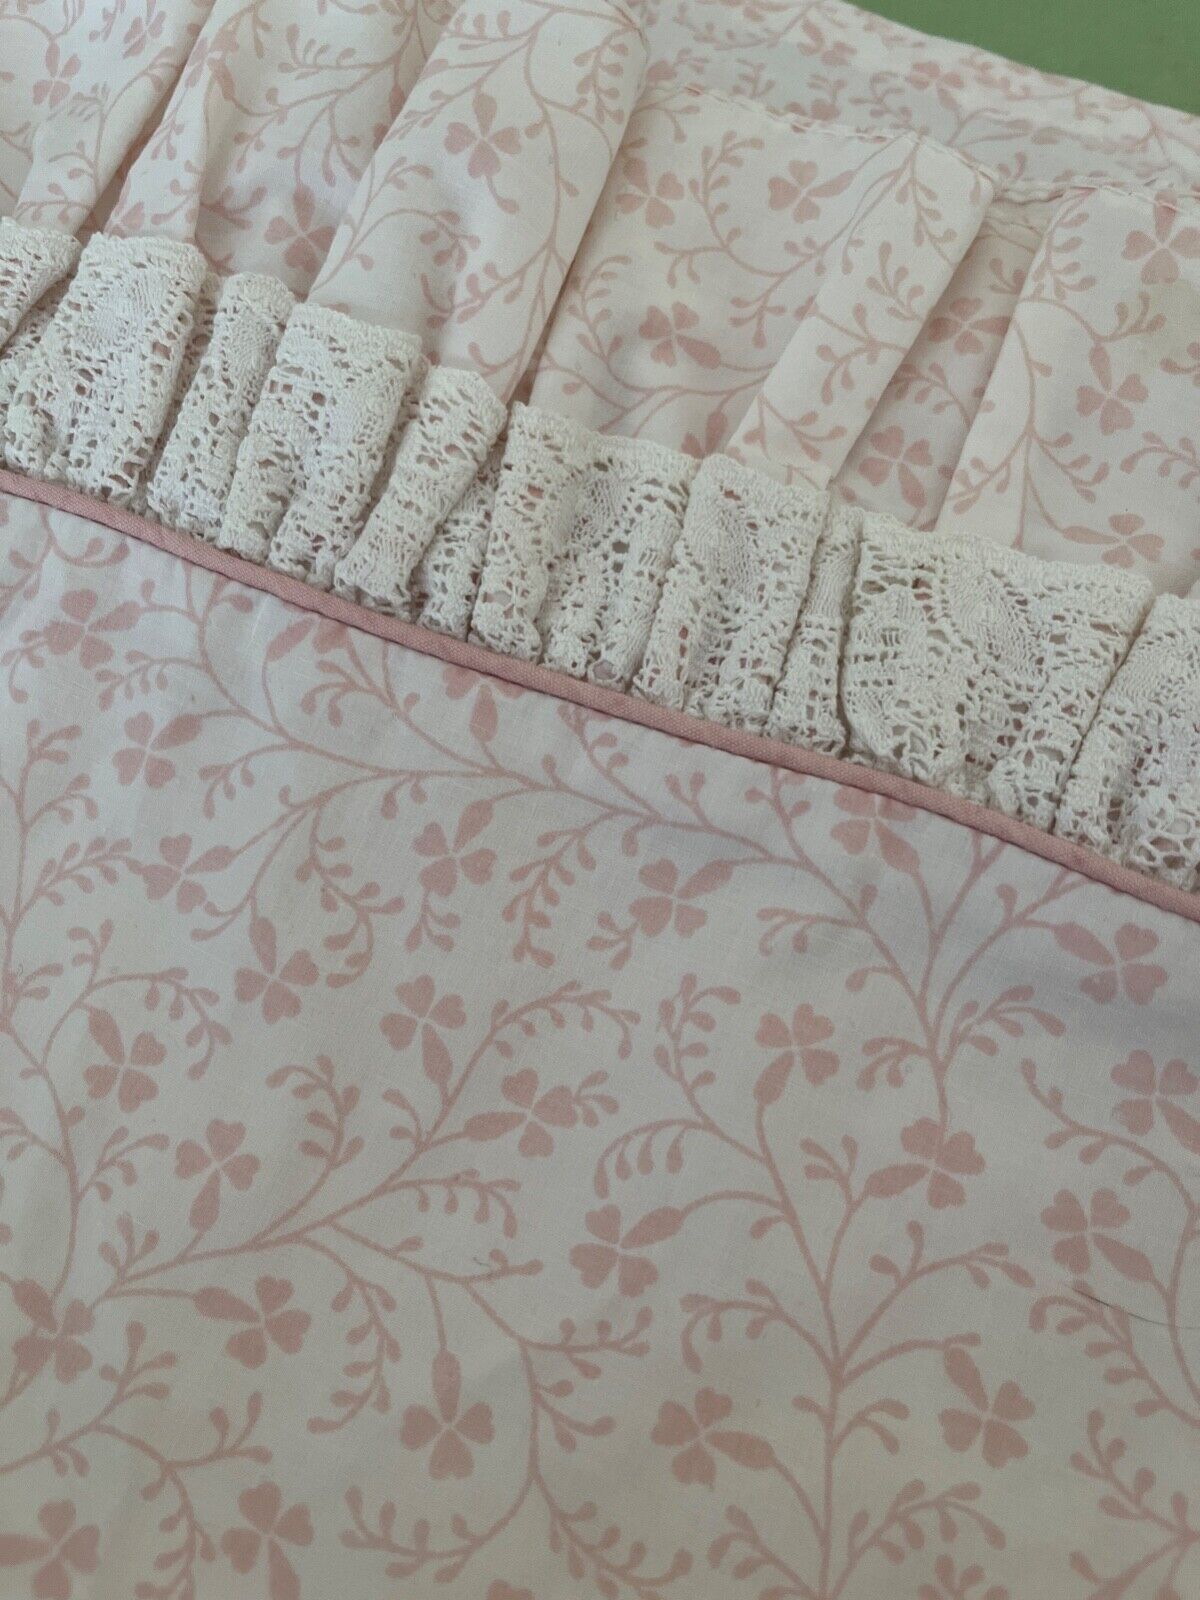 Vtg LAURA ASHLEY FULL /Double Flat Sheet Pink Flowers & Lace Ruffle